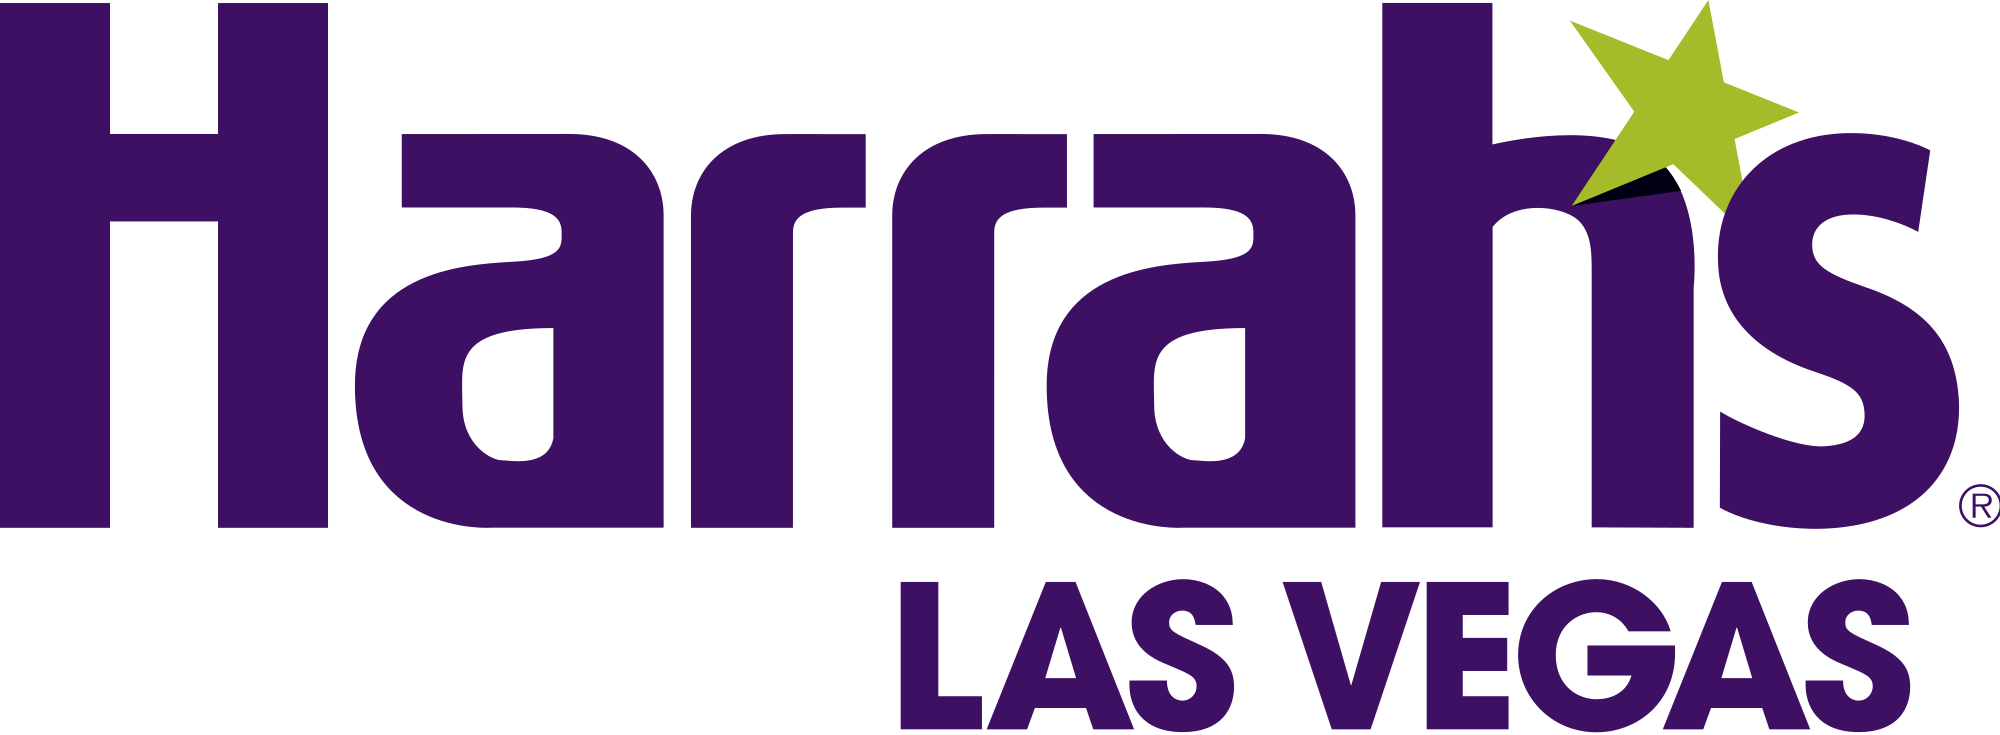 Las Vegas Logo - Harrah's Las Vegas logo.svg